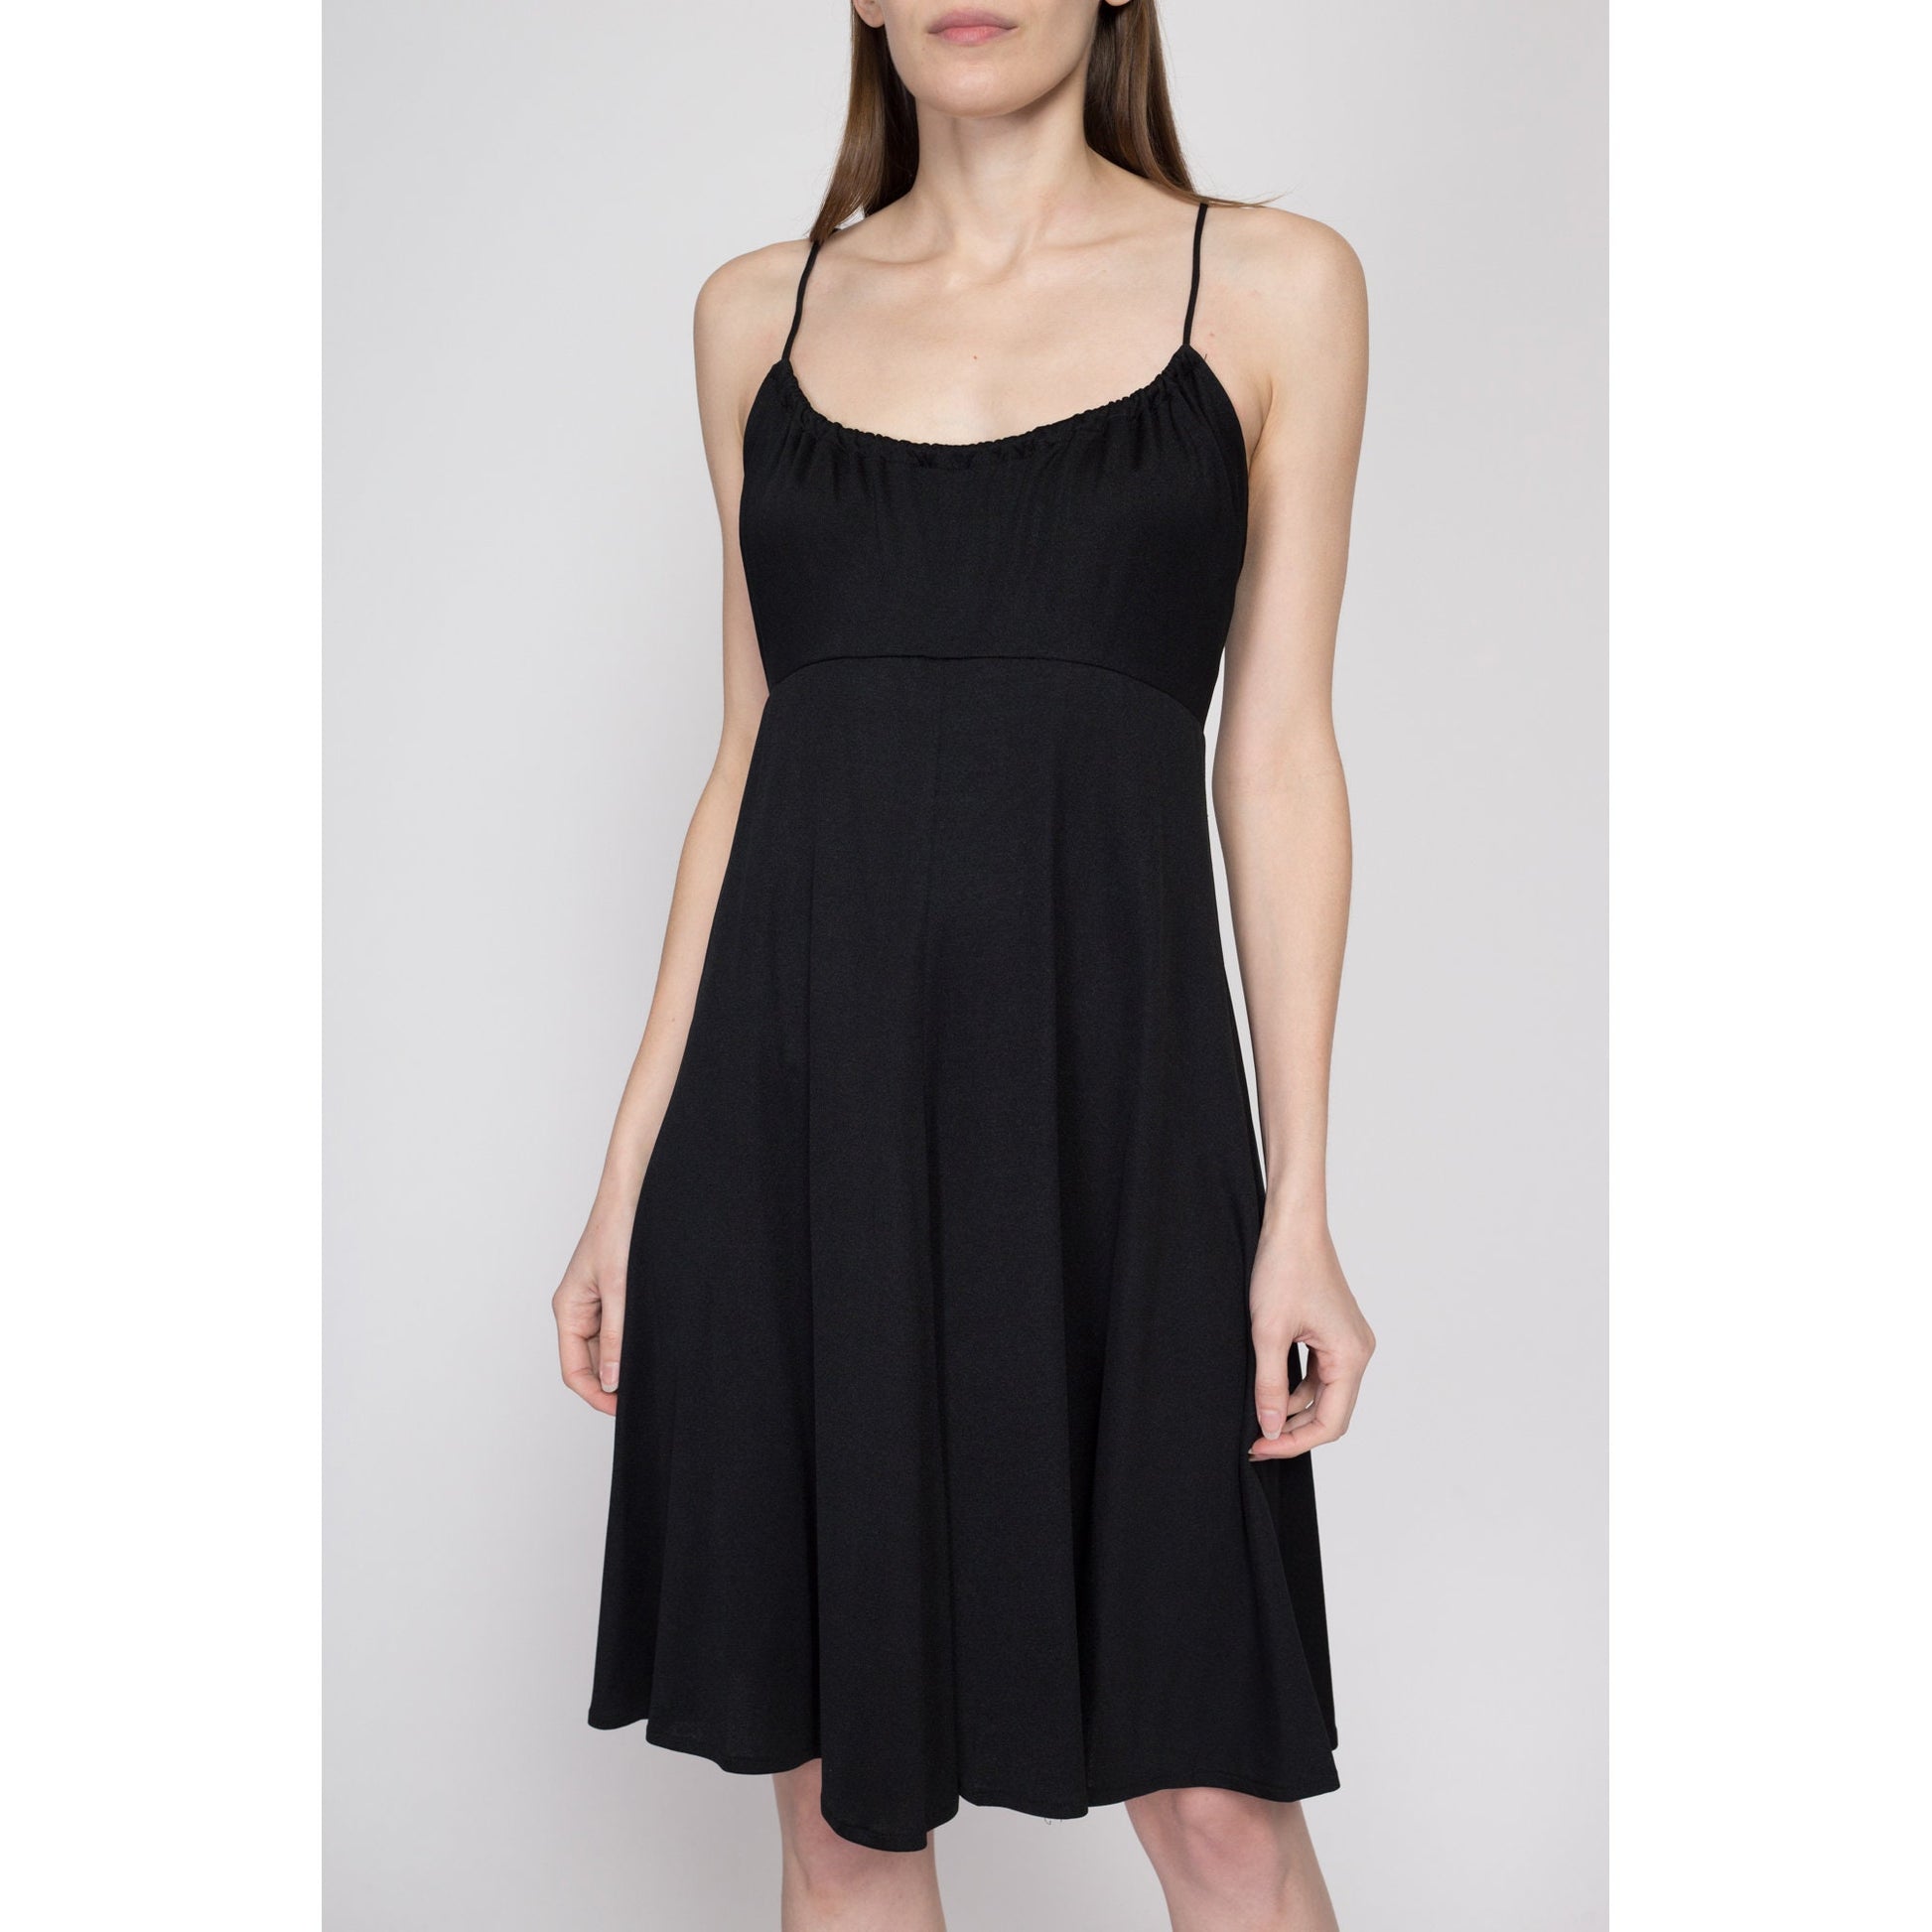 Medium 70s Black Cross Back Sundress | Vintage Criss Cross Strap Fit Flare Backless Mini Midi Dress